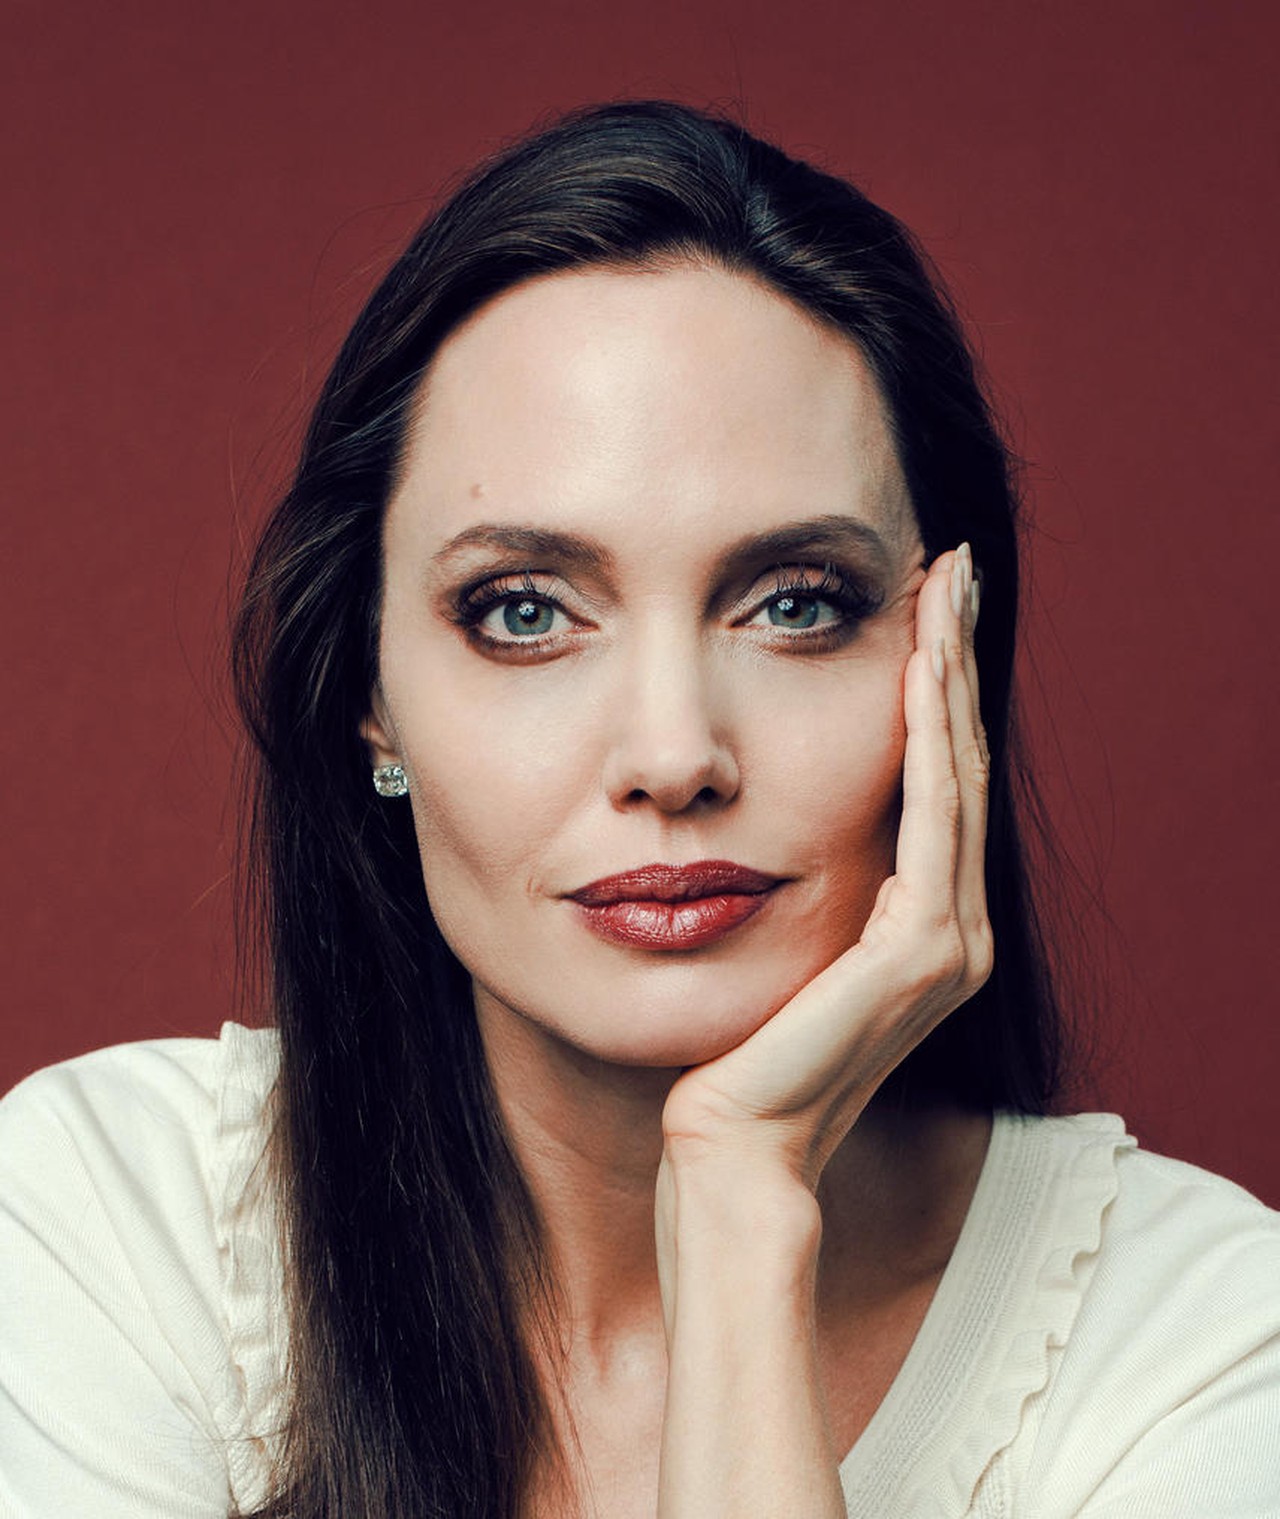 Angelina Jolie Movies, Bio and Lists on MUBI